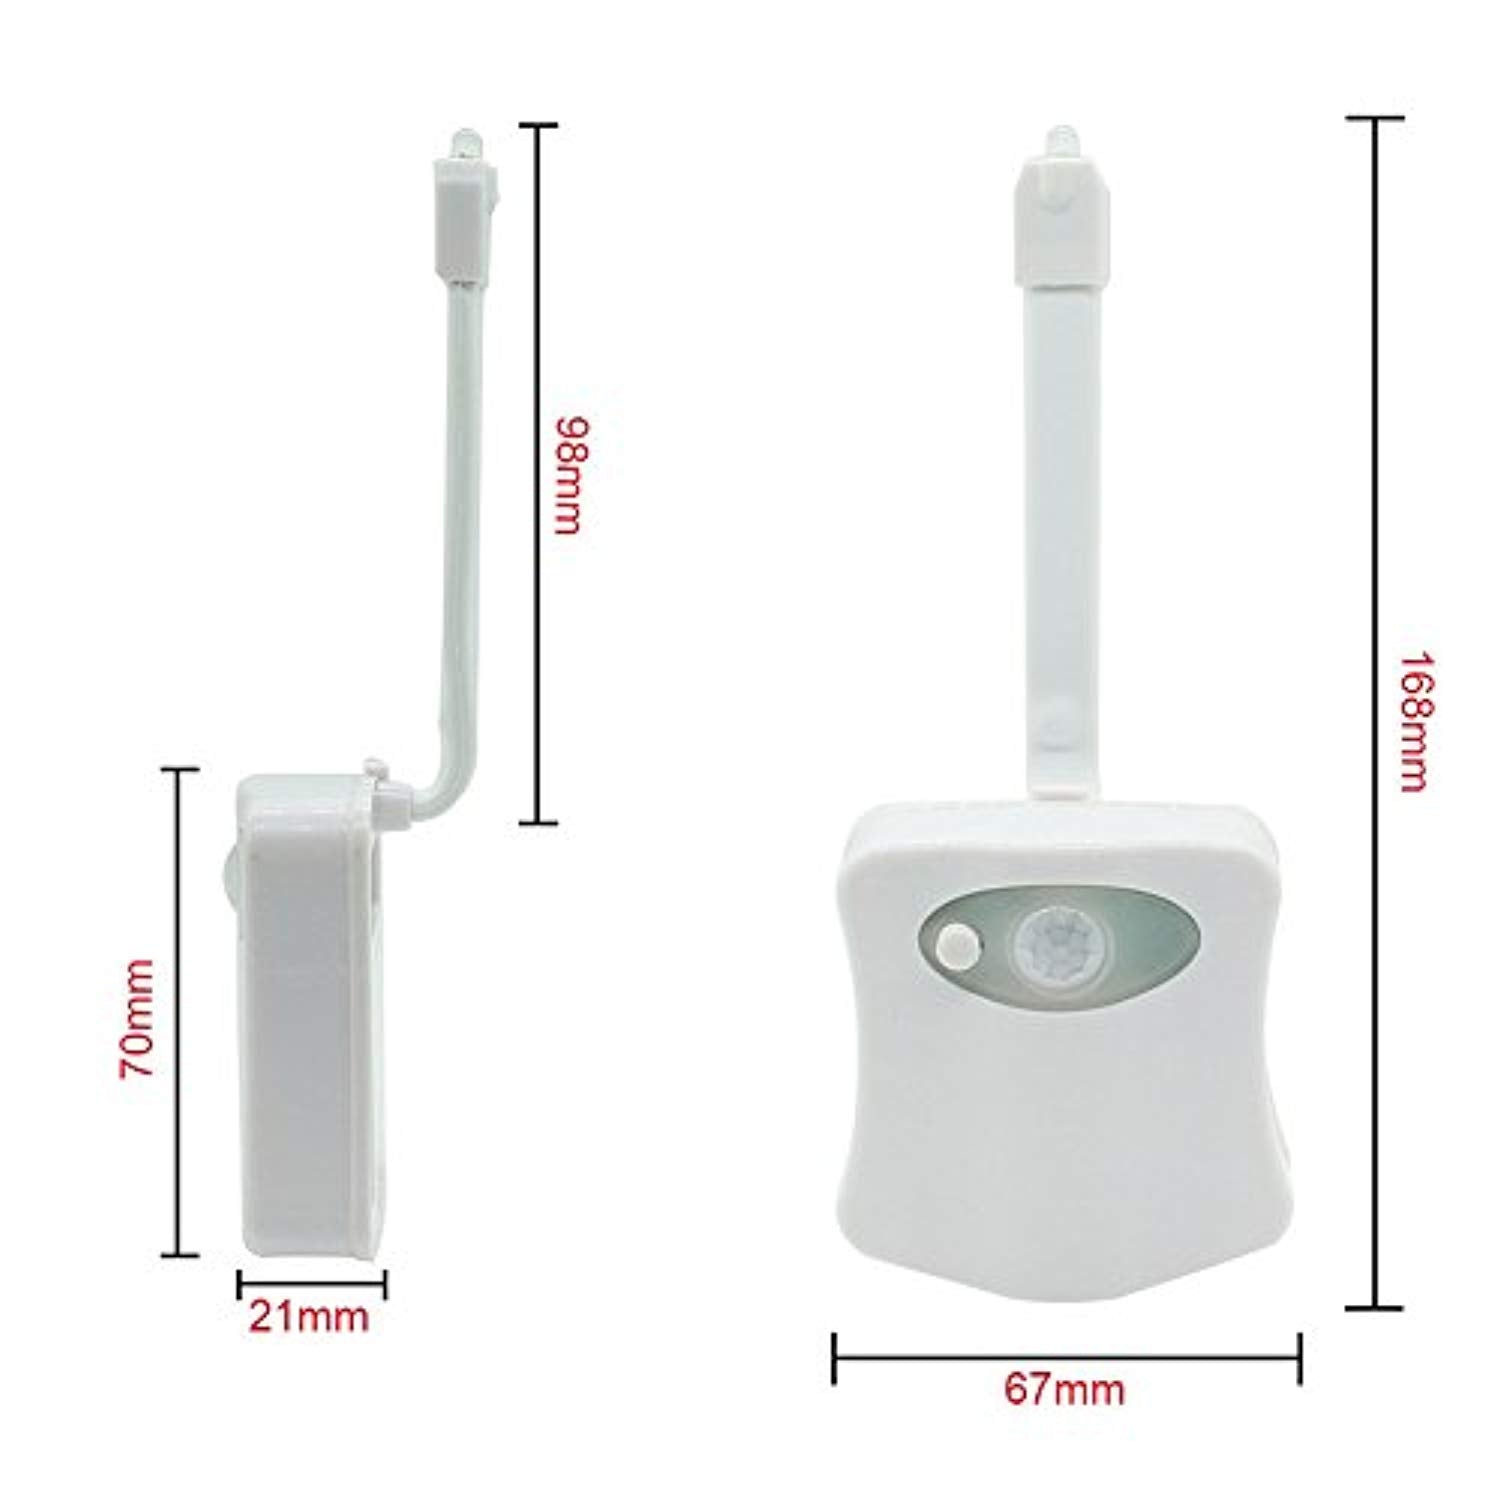 Motion Sensor LED Toilet Night Light Komire Light Detection Motion Activated Toilet Light with 8-Color Changing Battery Operated Waterproof